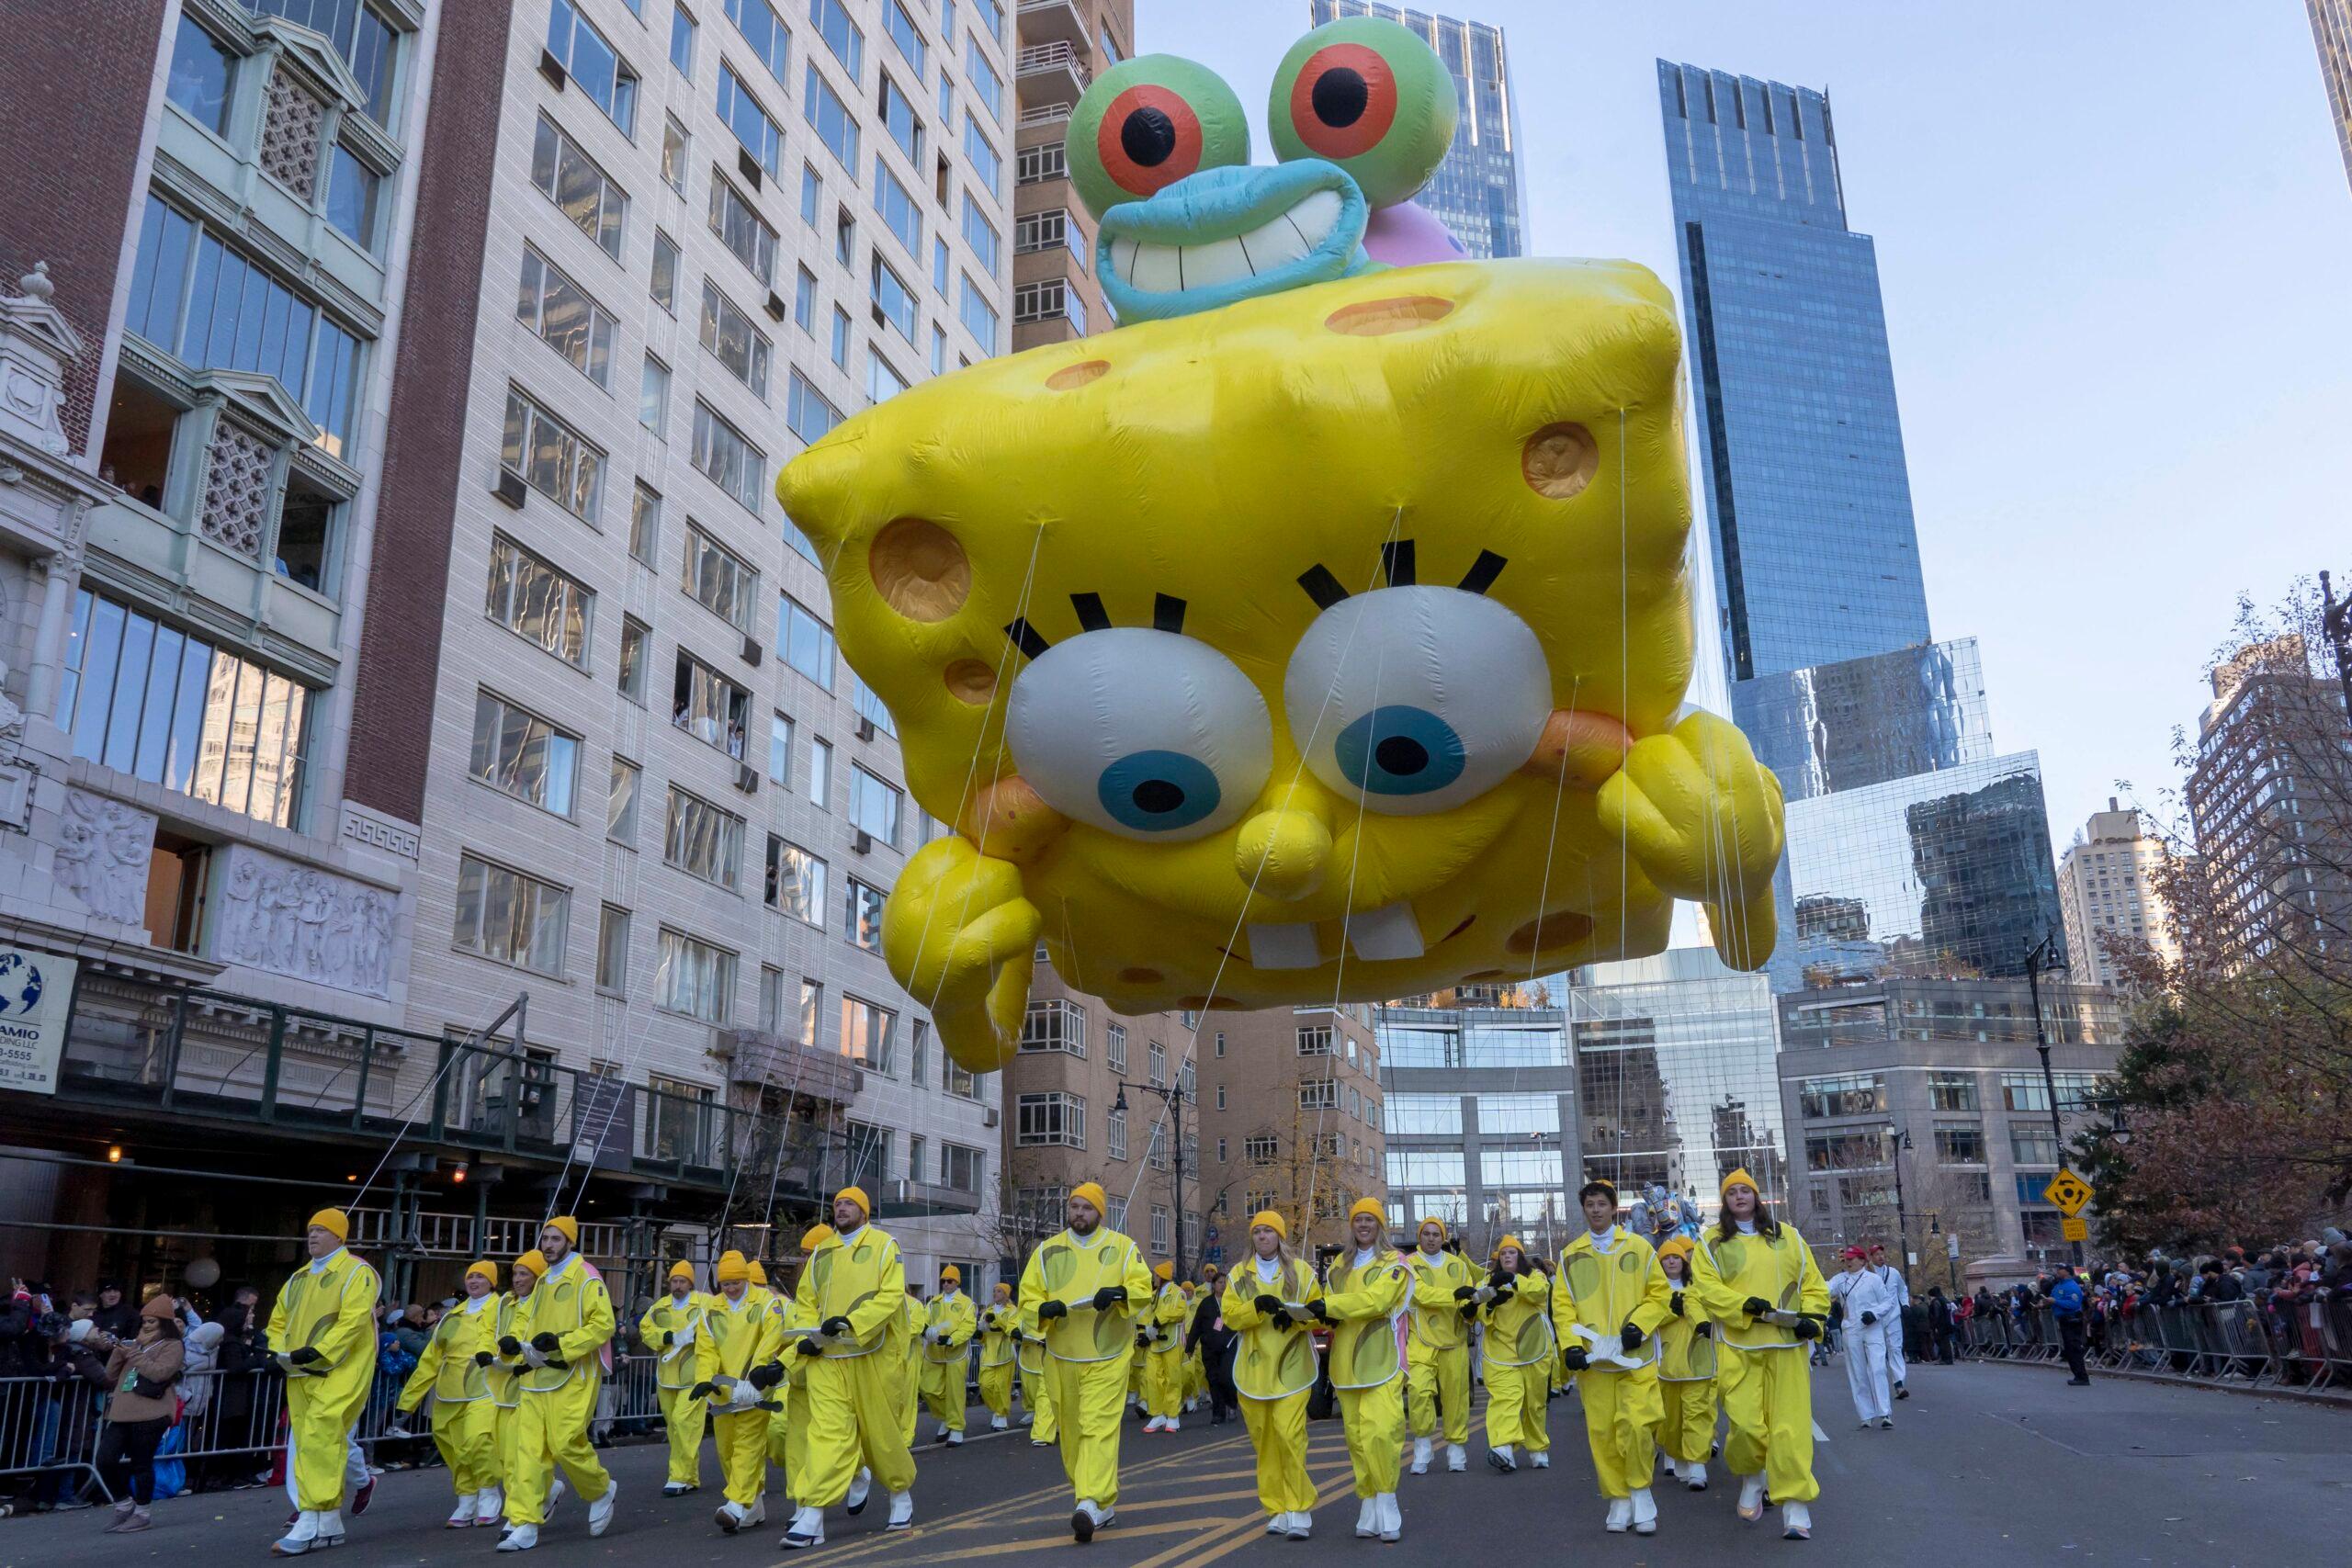 Spongebob Squarepants Macy's Thanksgiving Day balloon